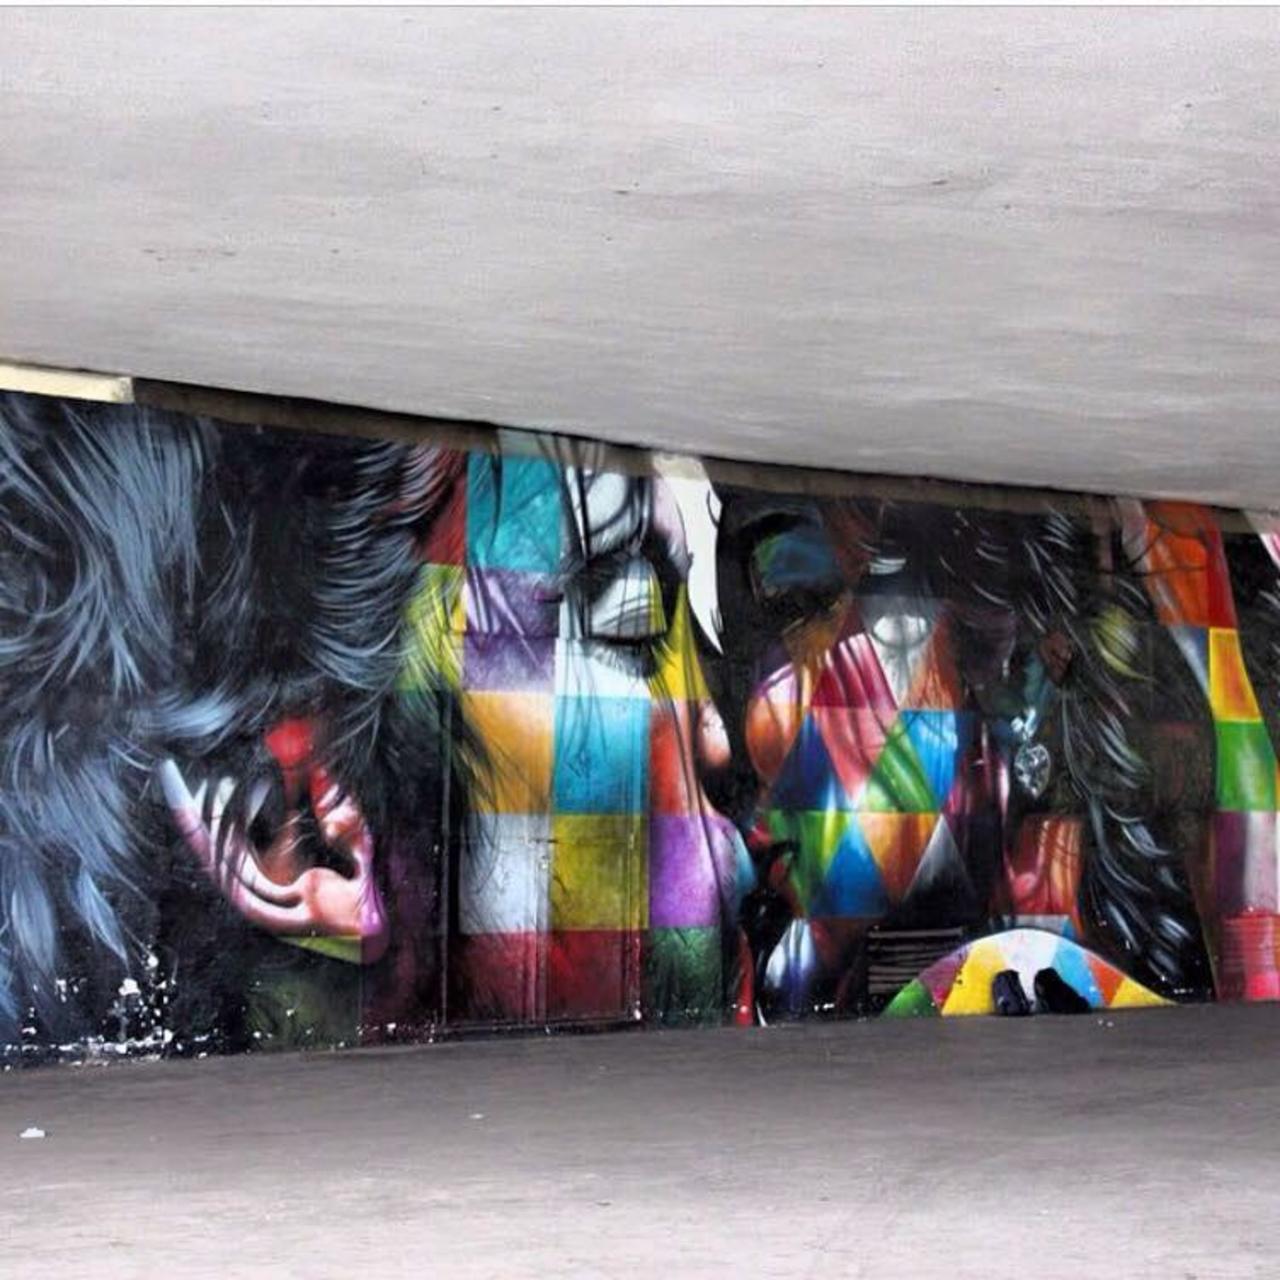 New Street Art by the brilliant Eduardo Kobra 

#art #mural #graffiti #streetart http://t.co/jFf6lXO7wT